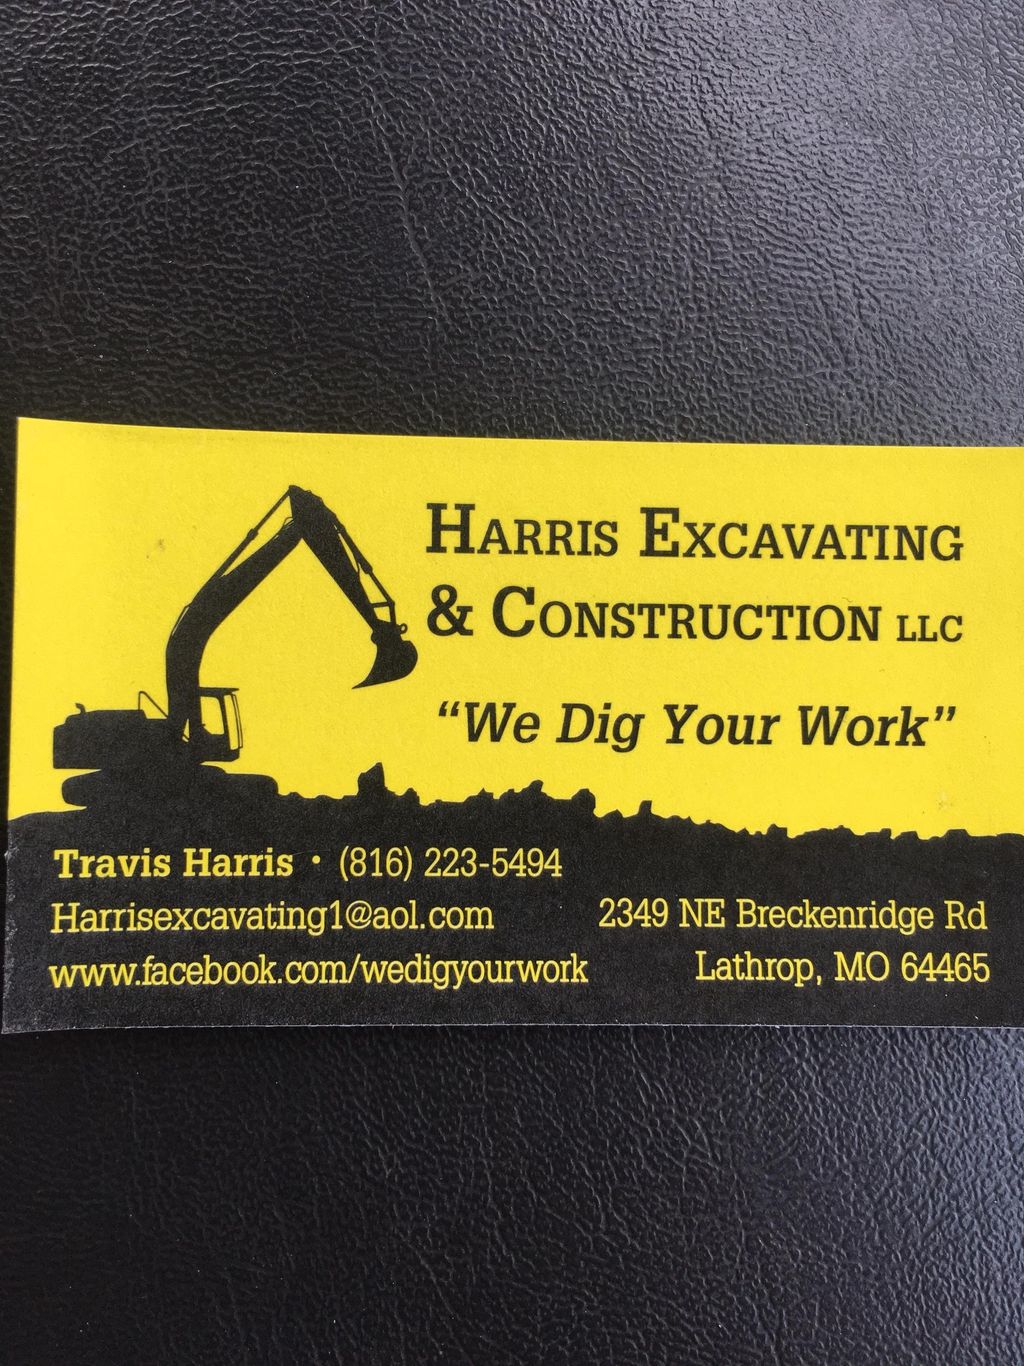 Harris excavating & construction